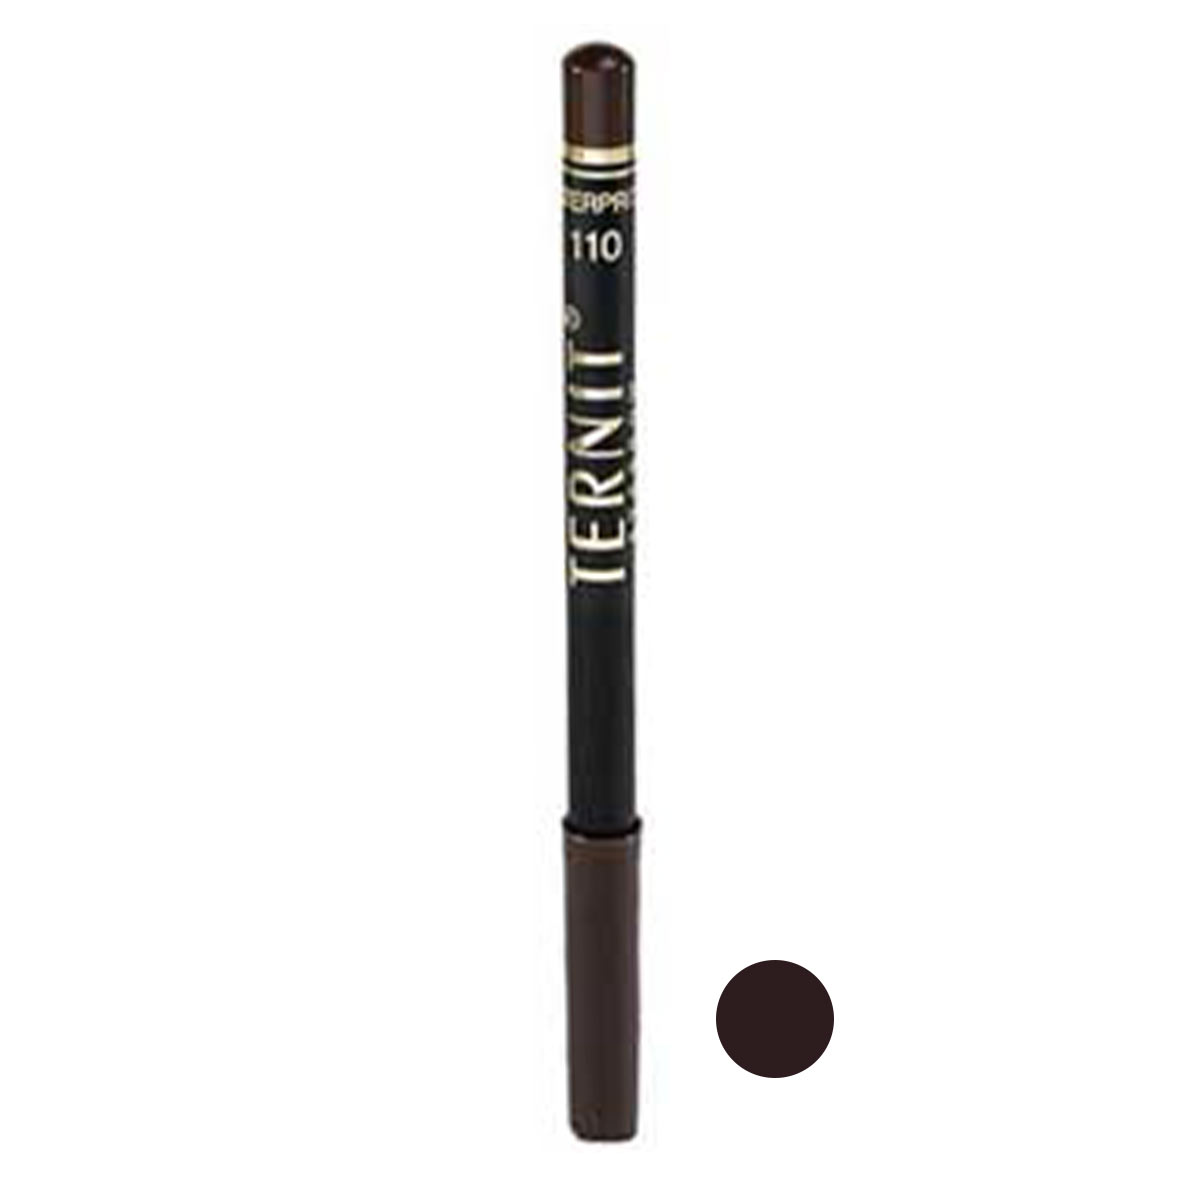 مداد ابرو ضدآب Ternit ترنیت شماره 110 